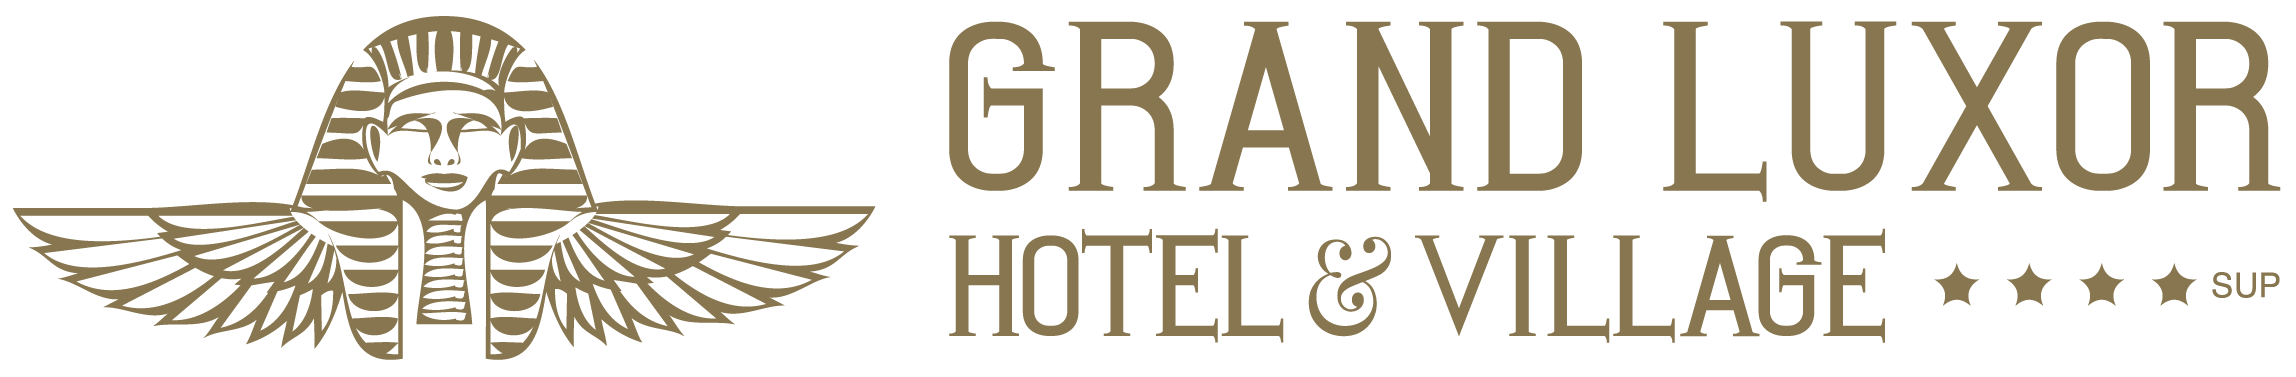 Grand Luxor Hotels